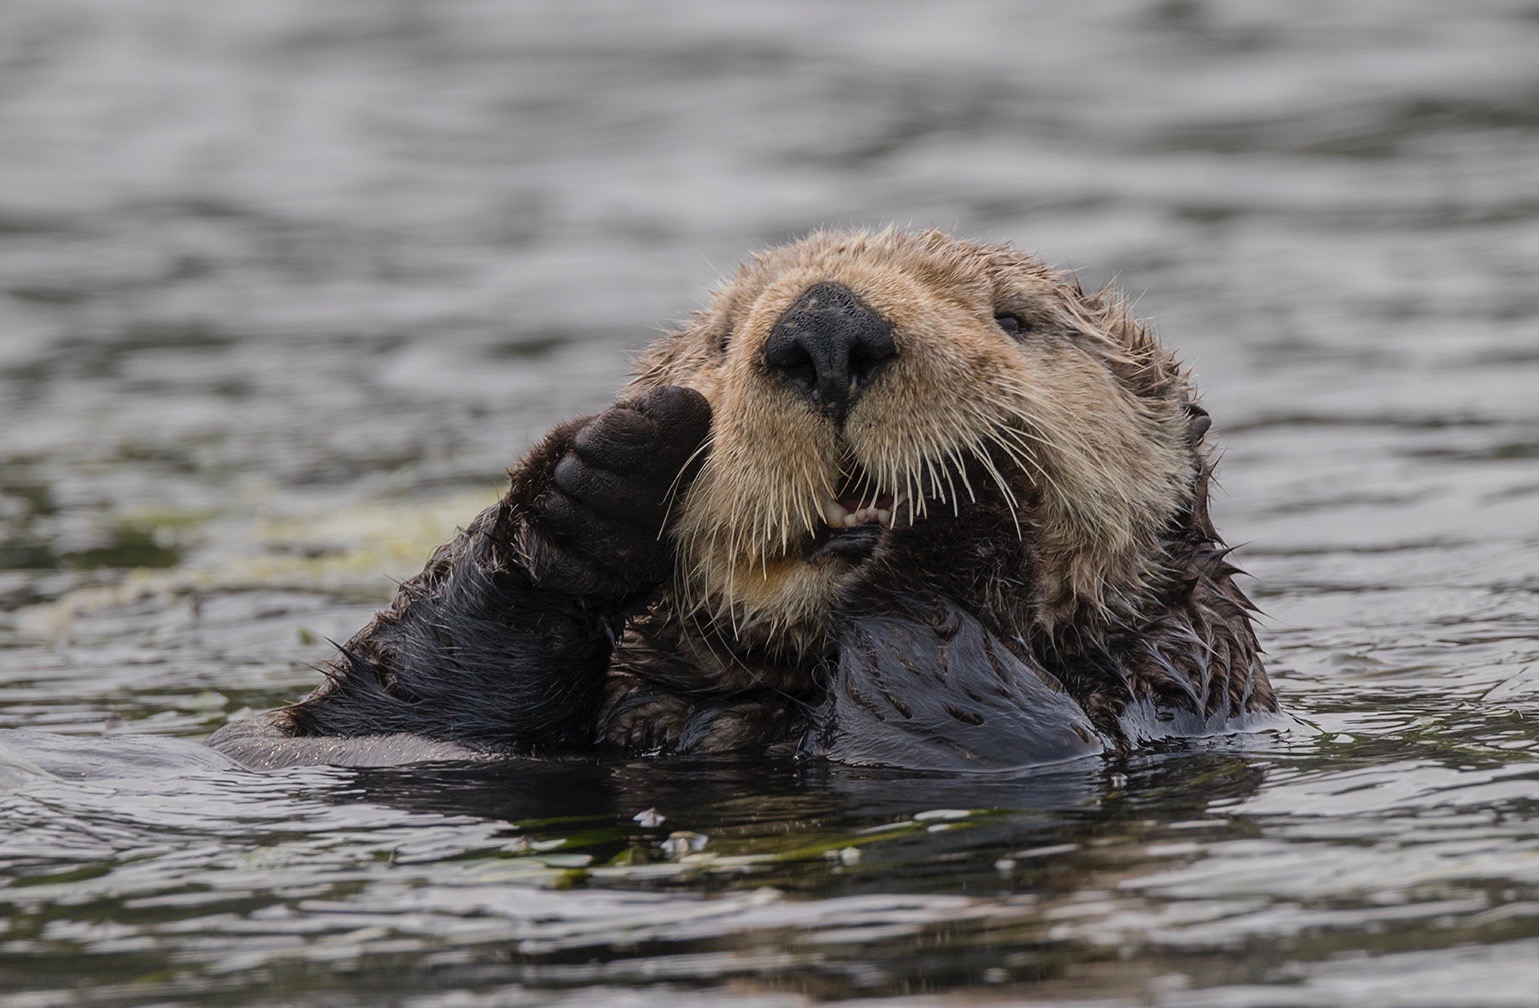 Southern sea otter closeup in the waters off coastal California